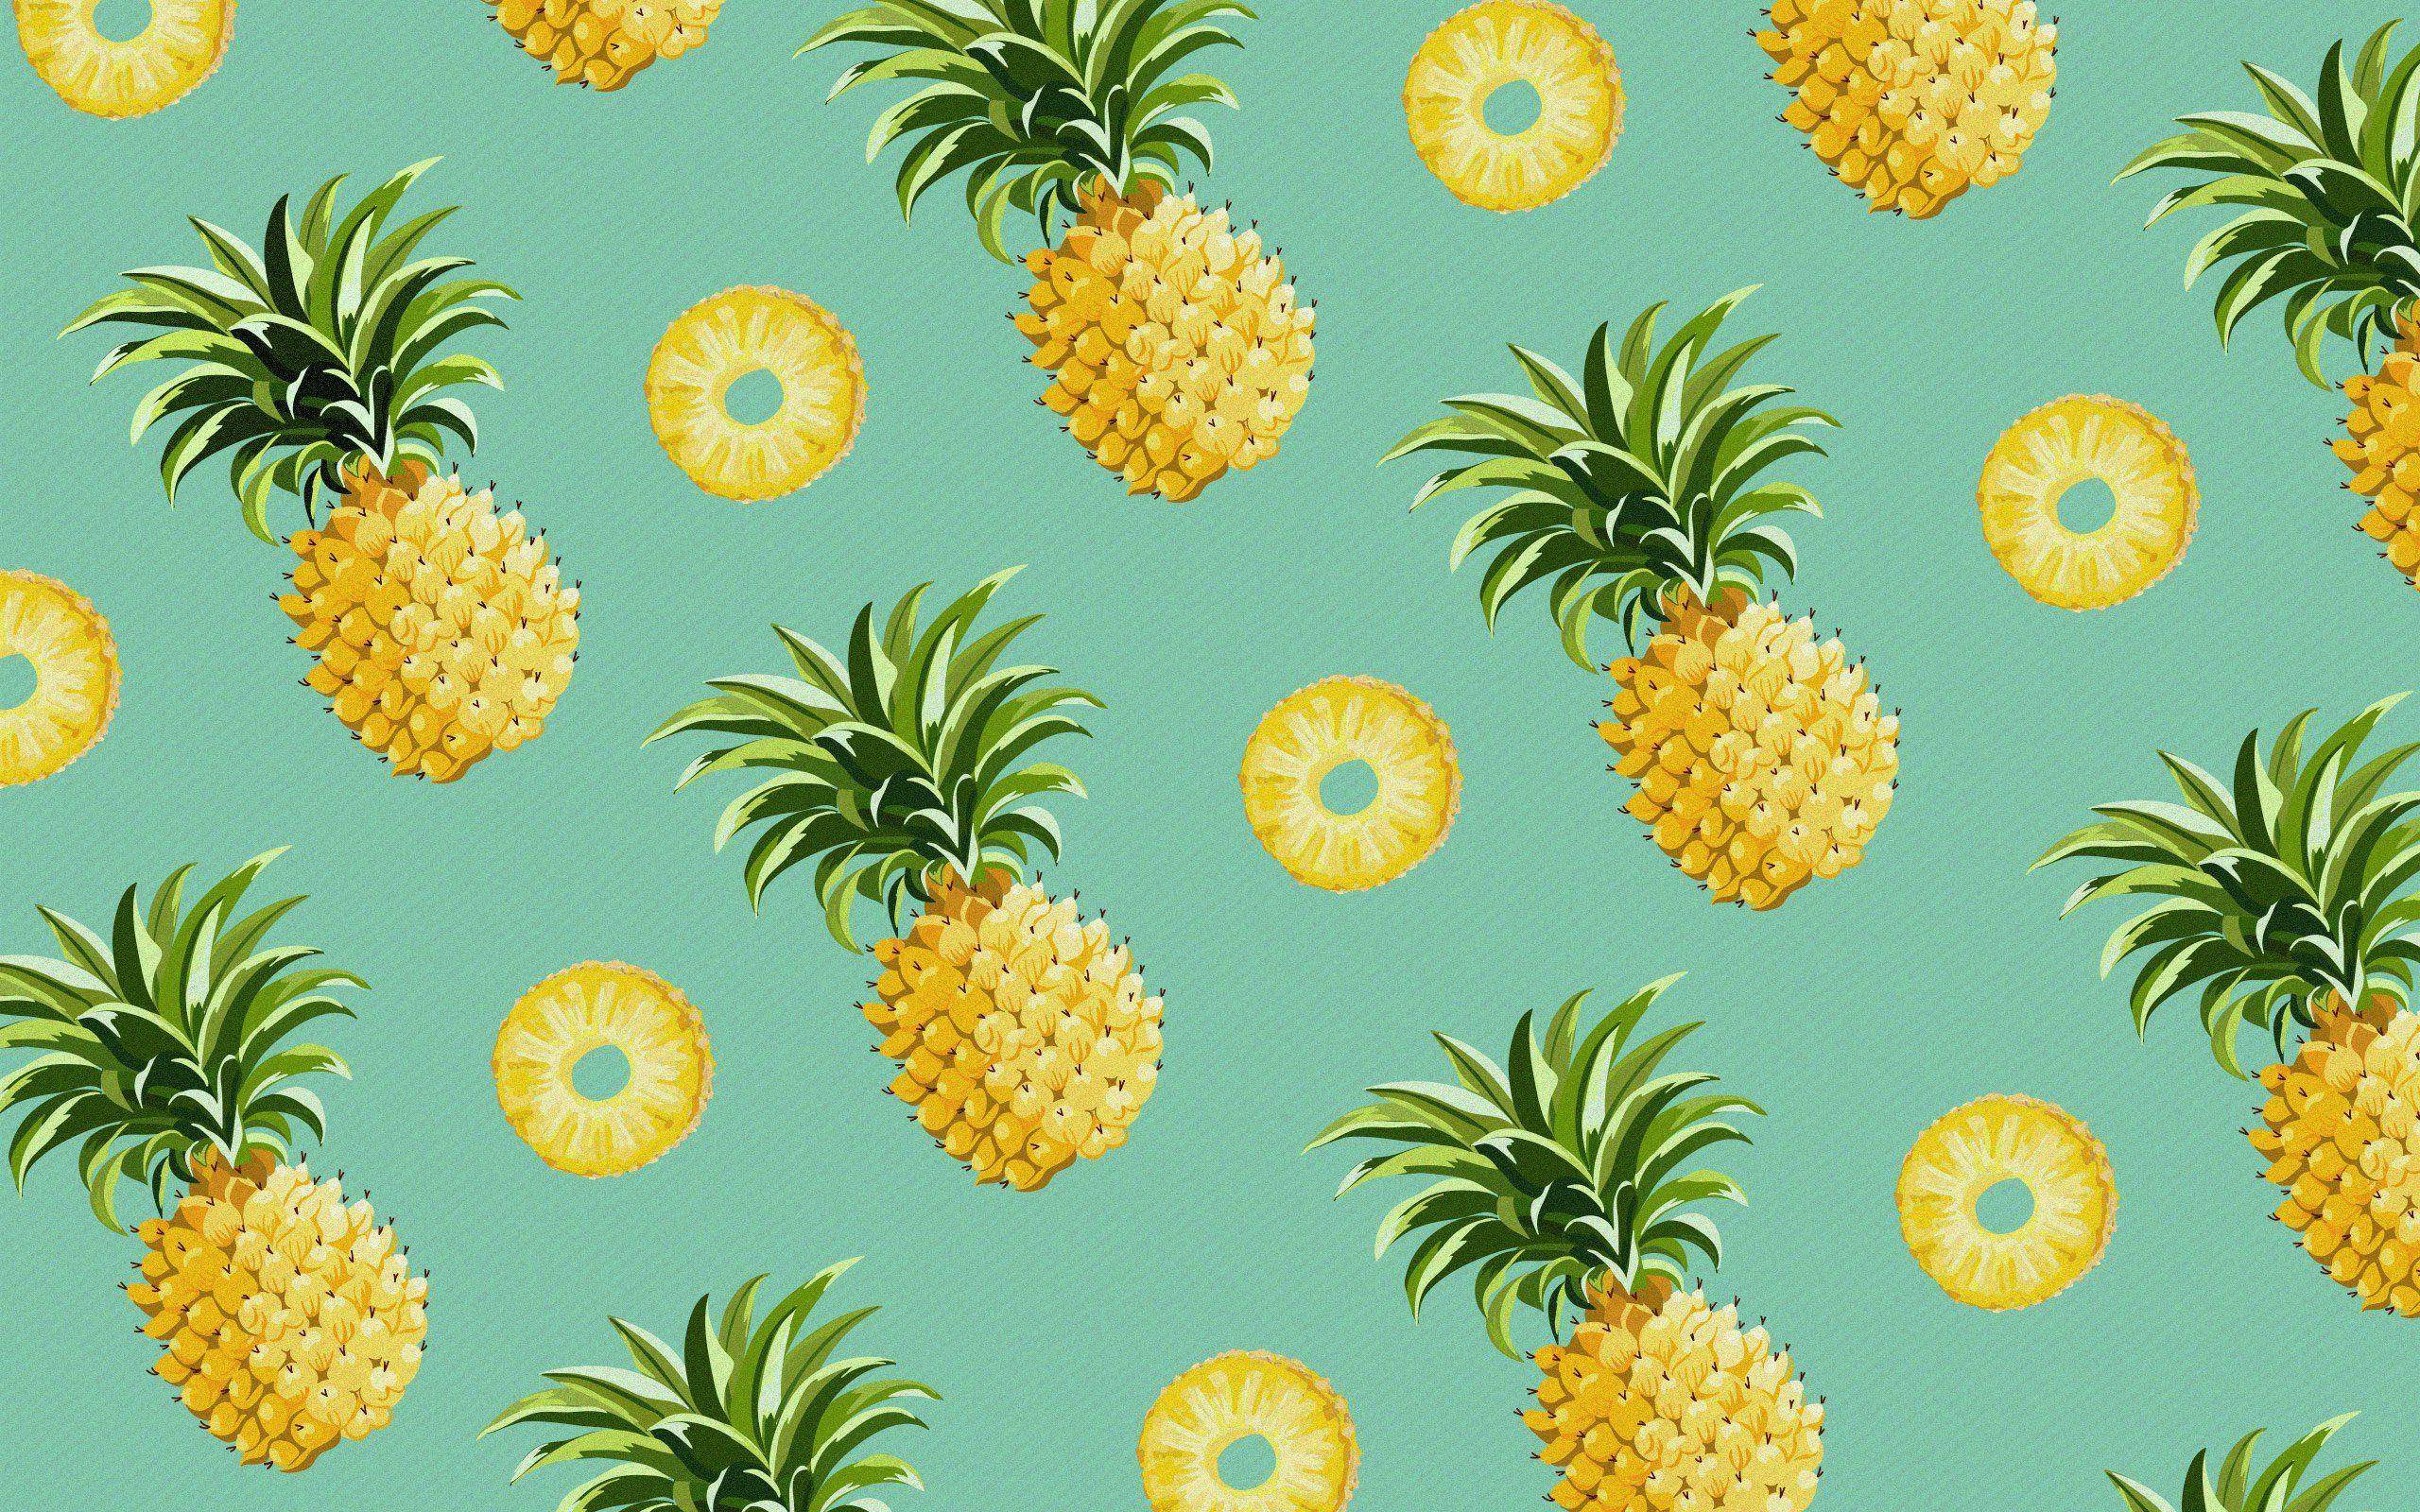 Pineapple Aesthetic Wallpaper Free Pineapple